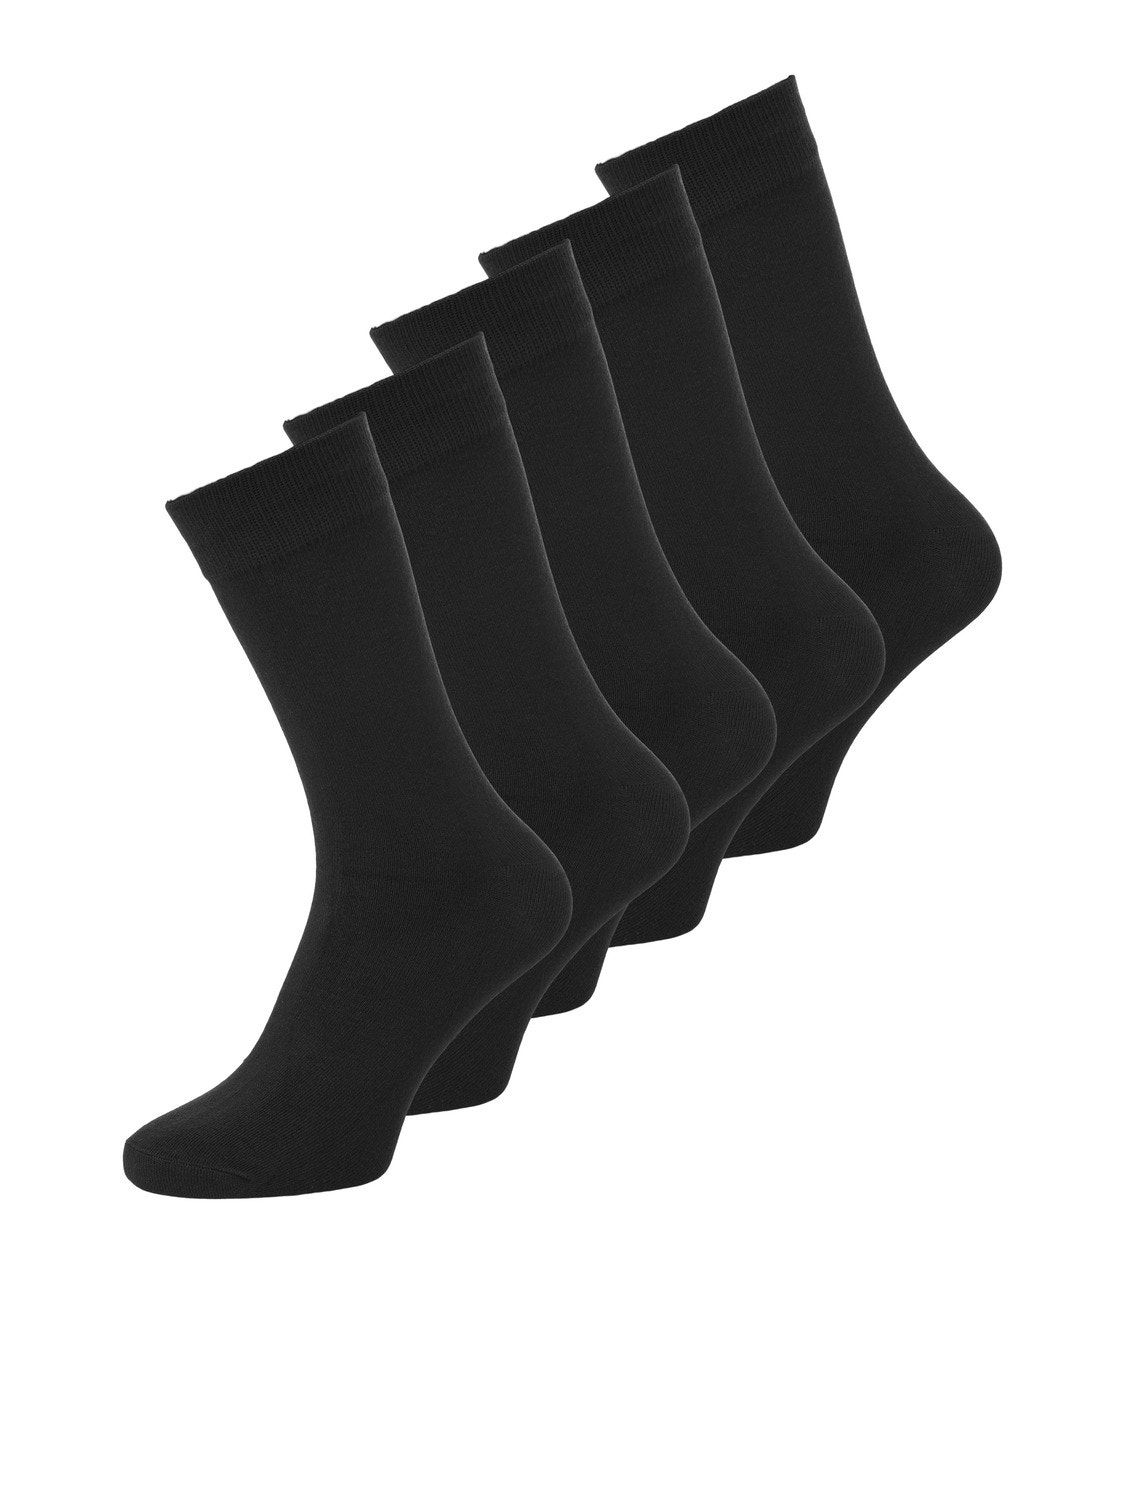 Jack & Jones 5-pack Socks -Black - 12198027